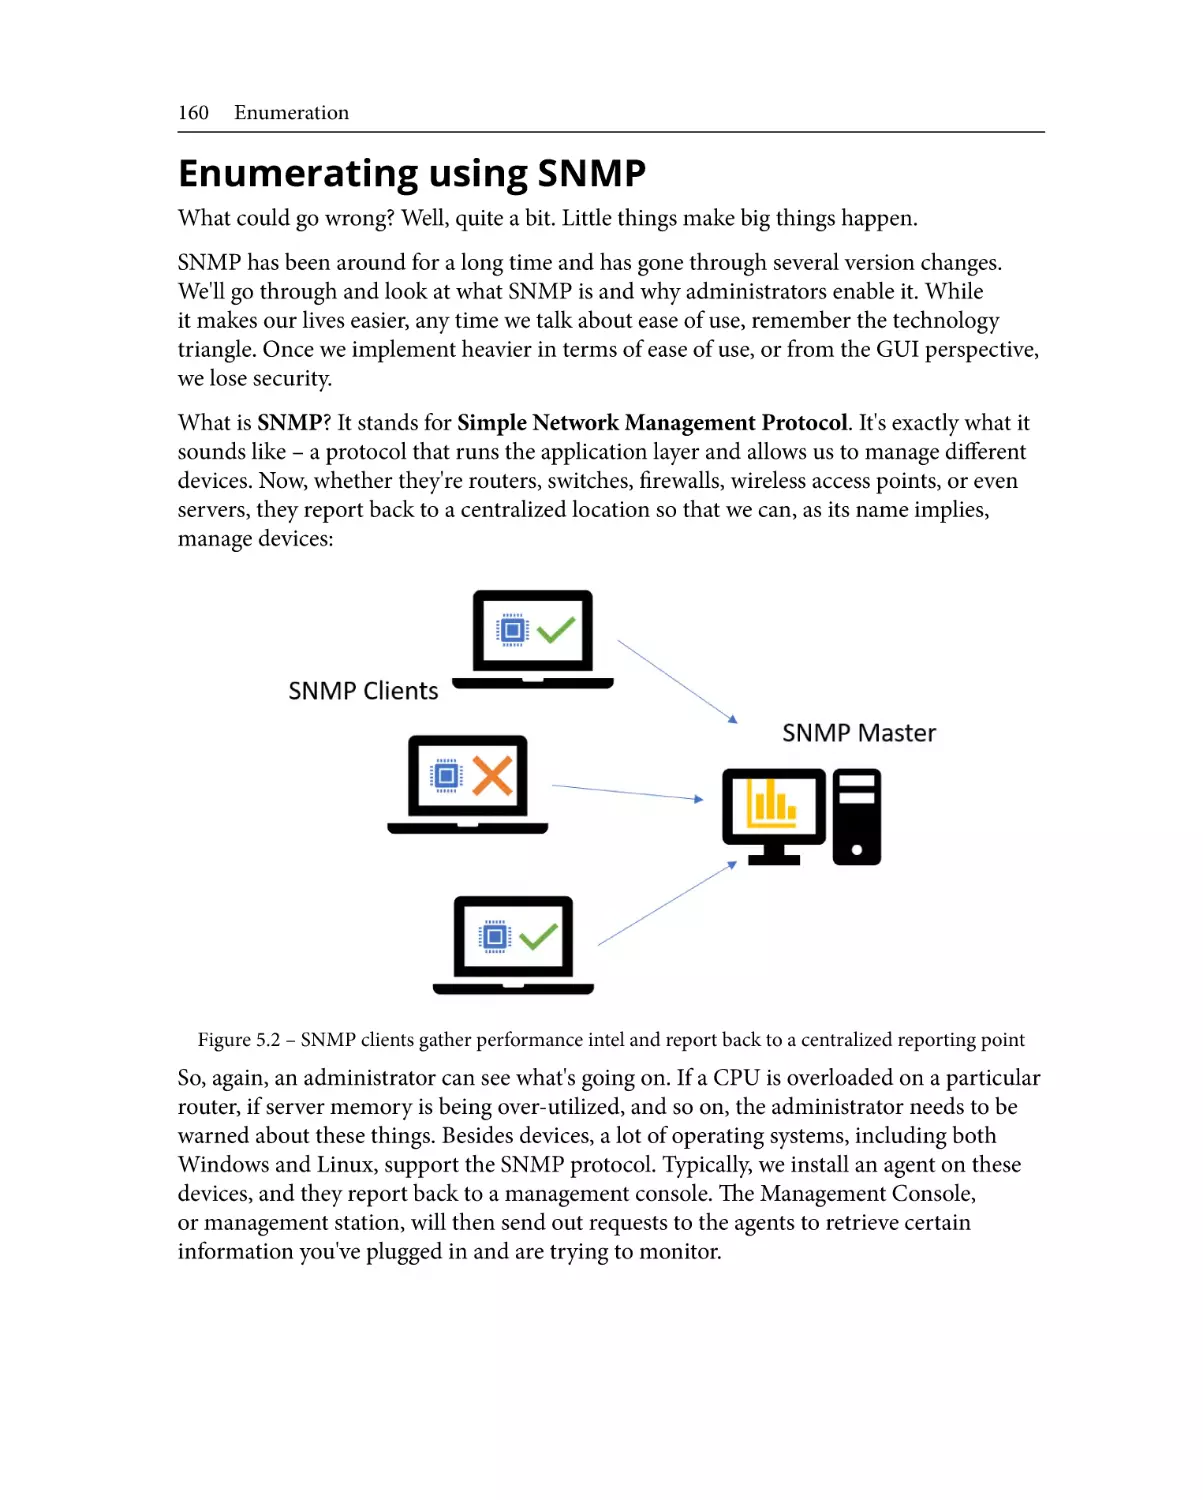 Enumerating using SNMP